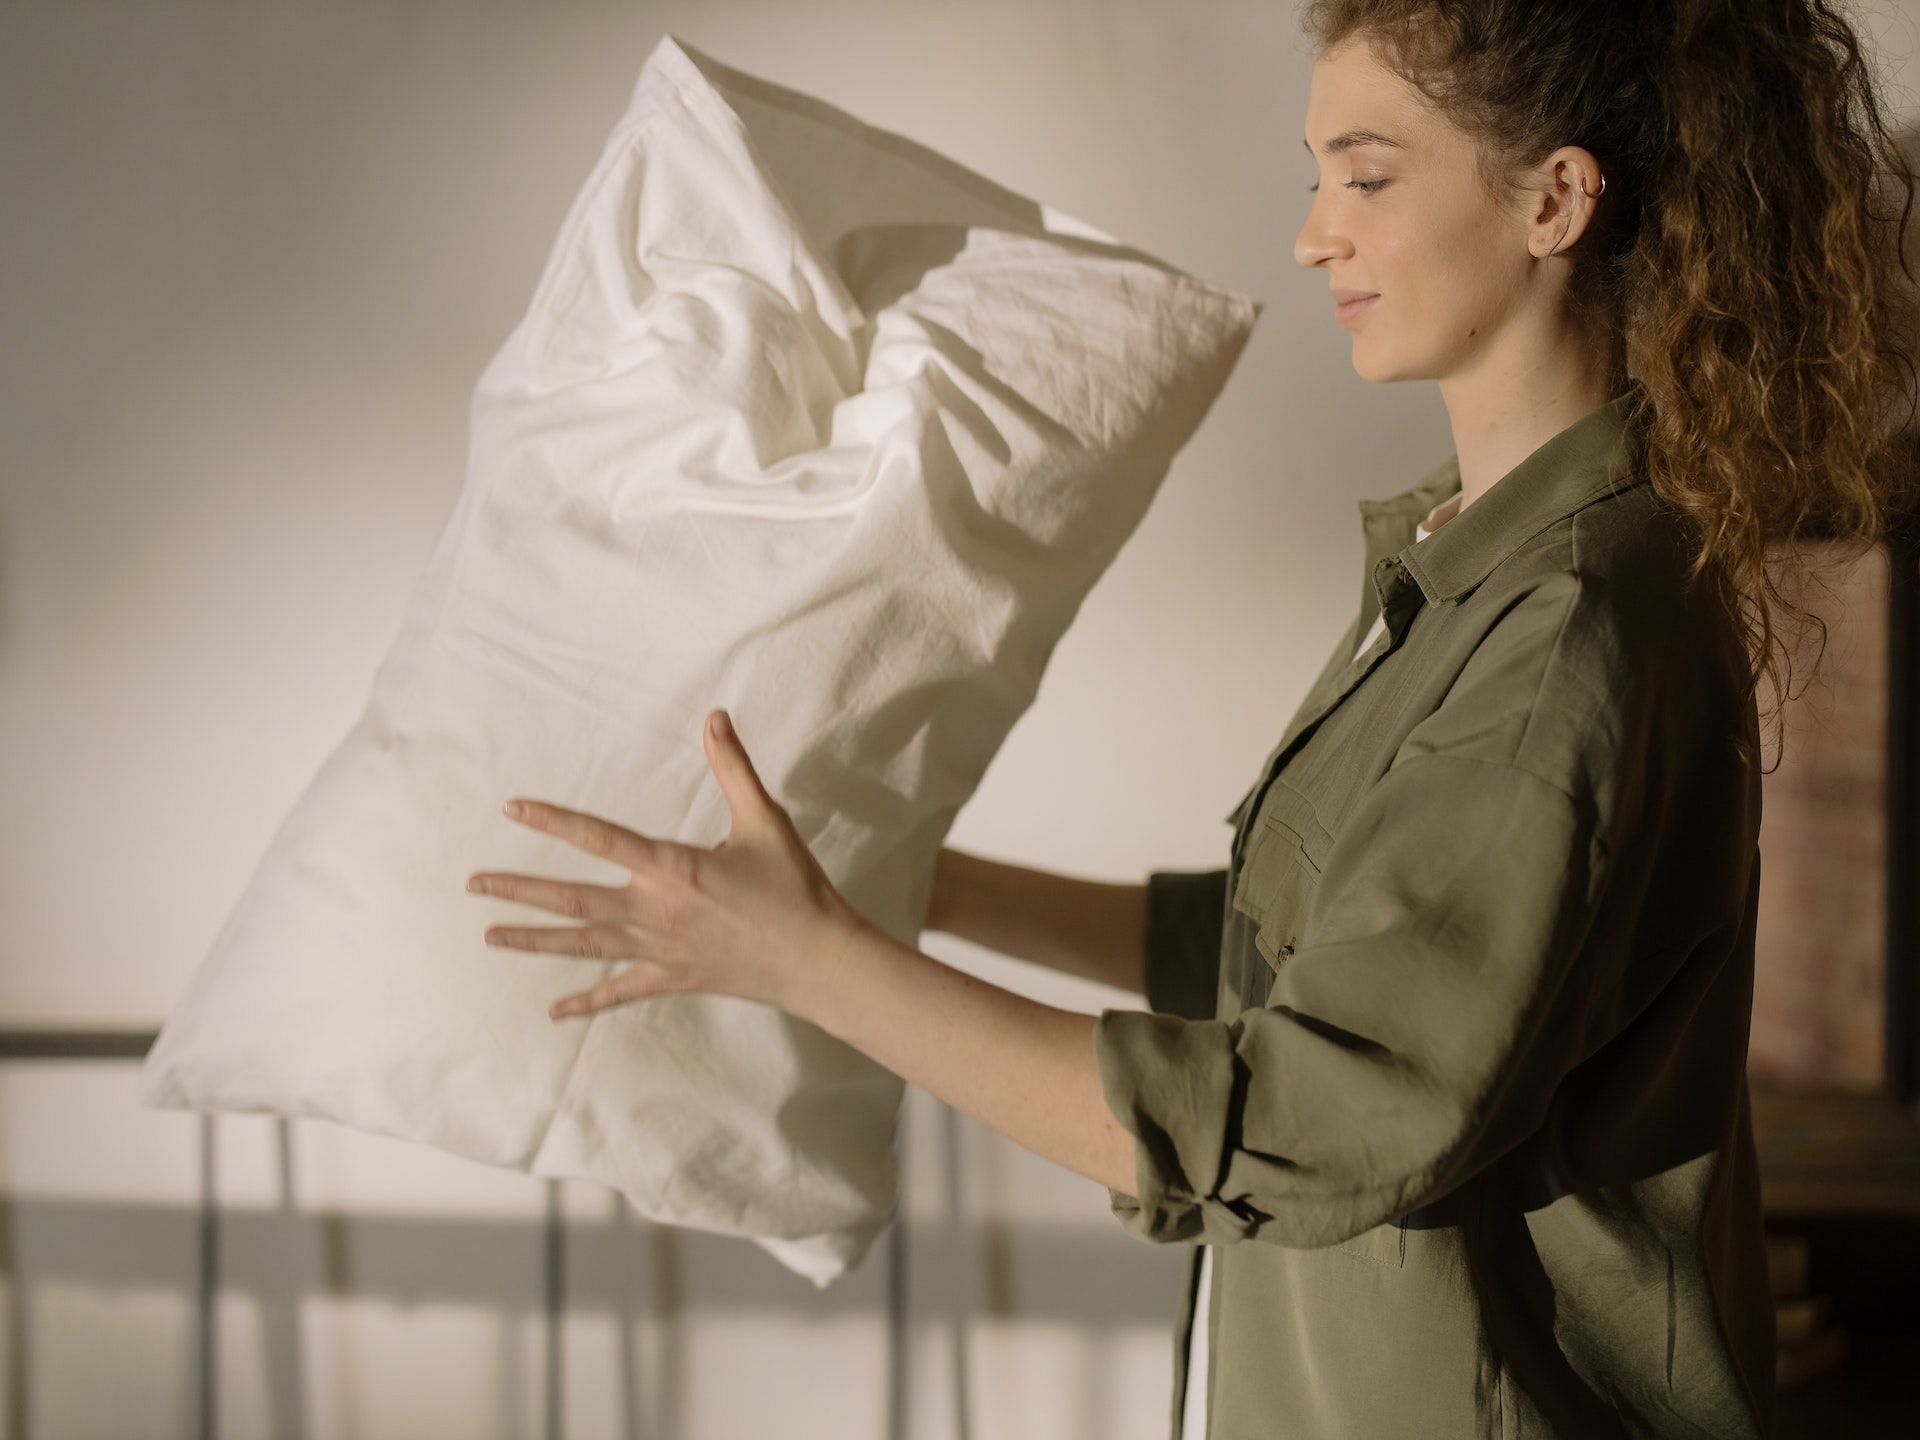 Silk pillowcases prevent tangling. (Photo via Pexels/cottonbro studio)